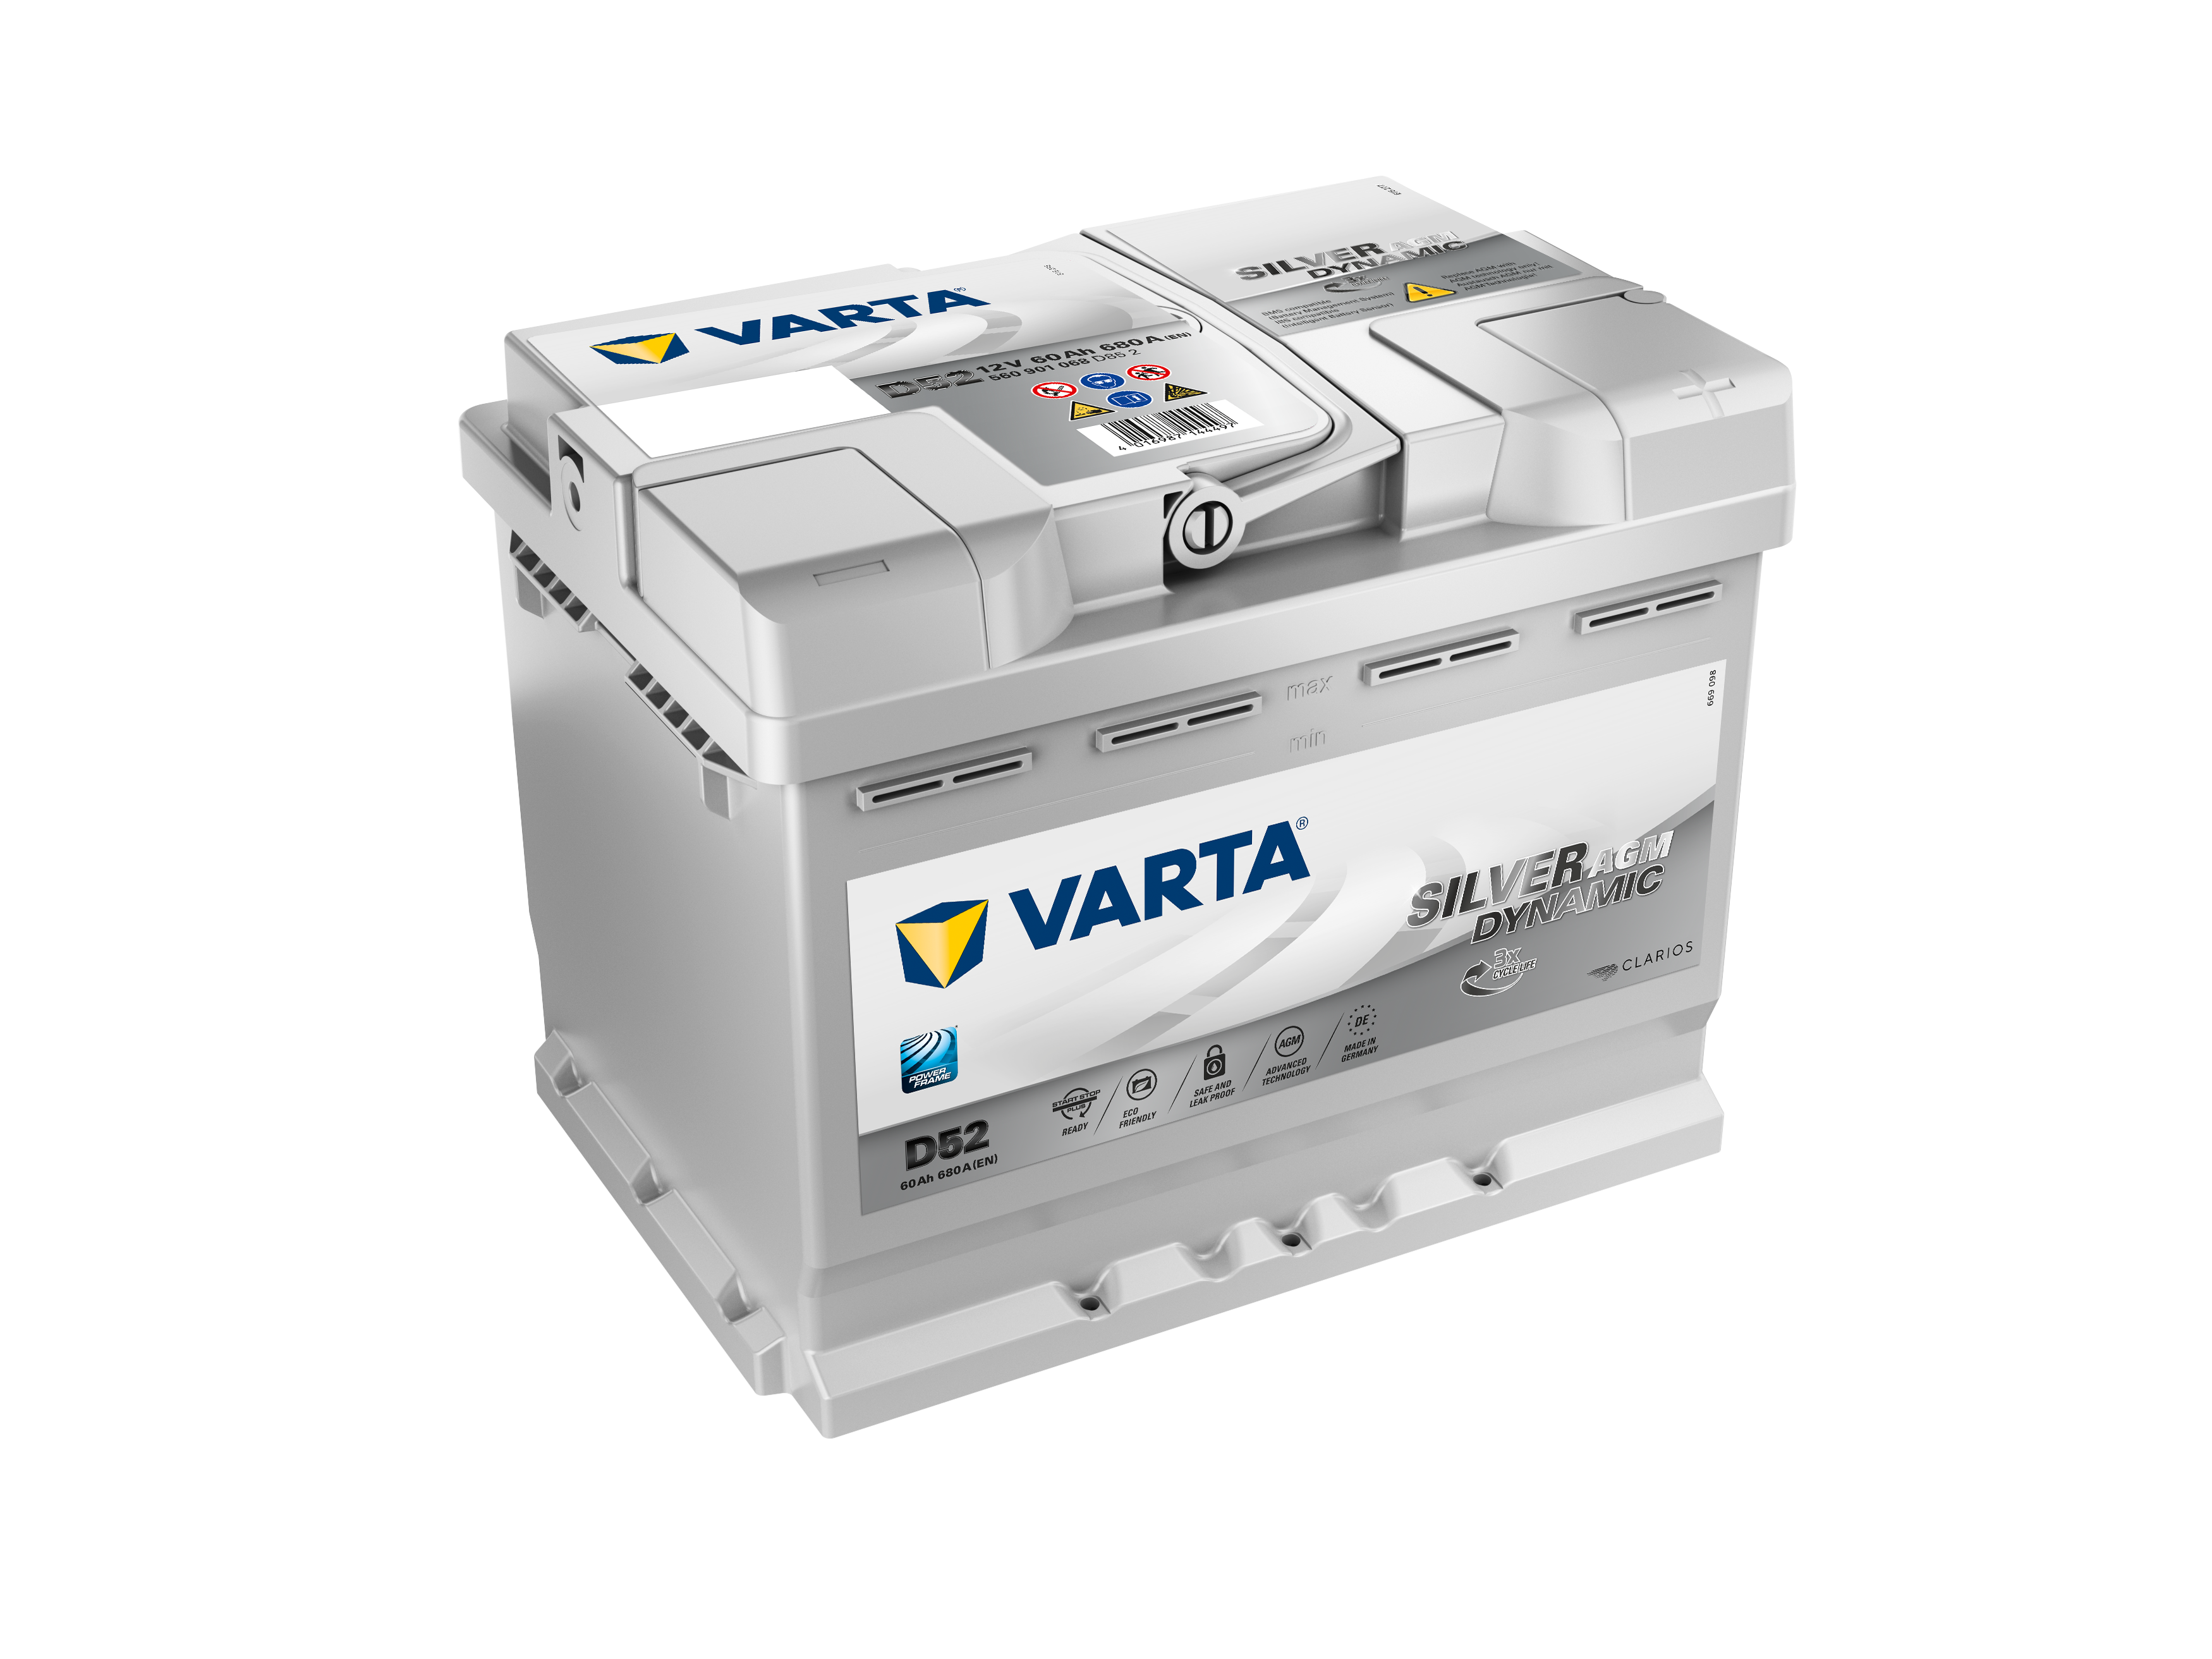 VARTA D52 56001 AGM Start-Stop